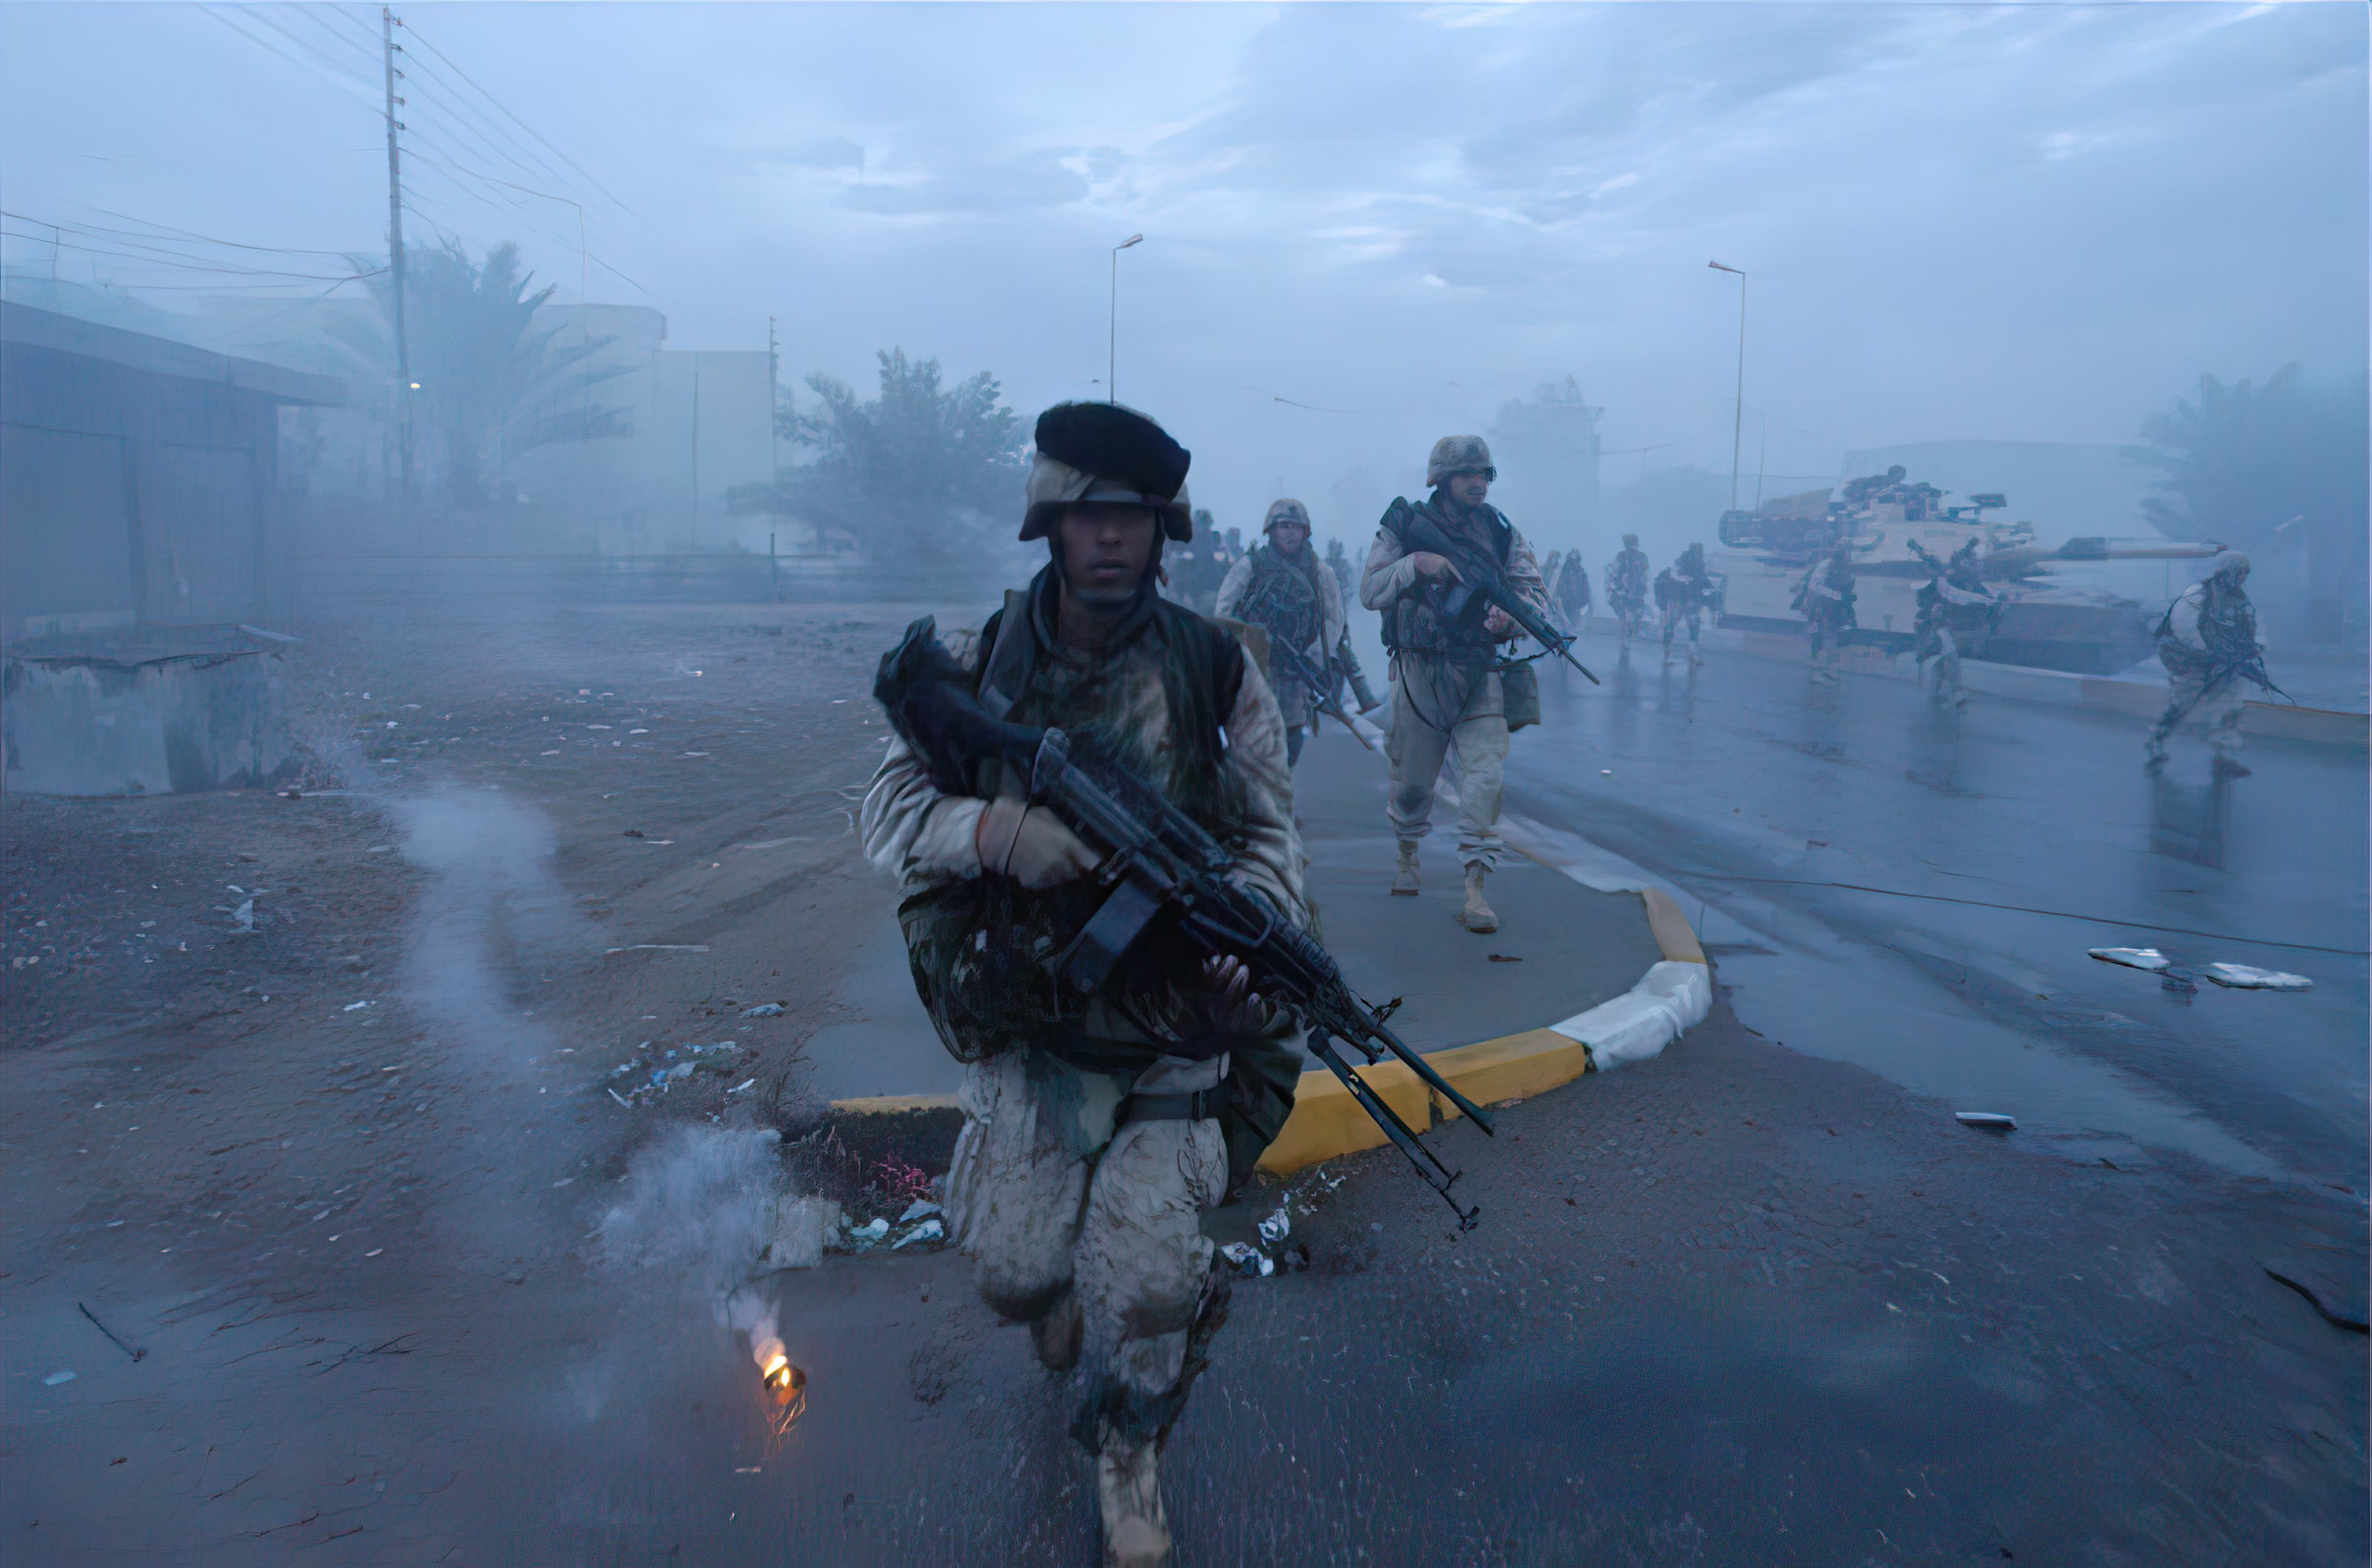 Battlefield Fallujah - Episode 9: The Jolan (November 12, 2004) - Image from battle